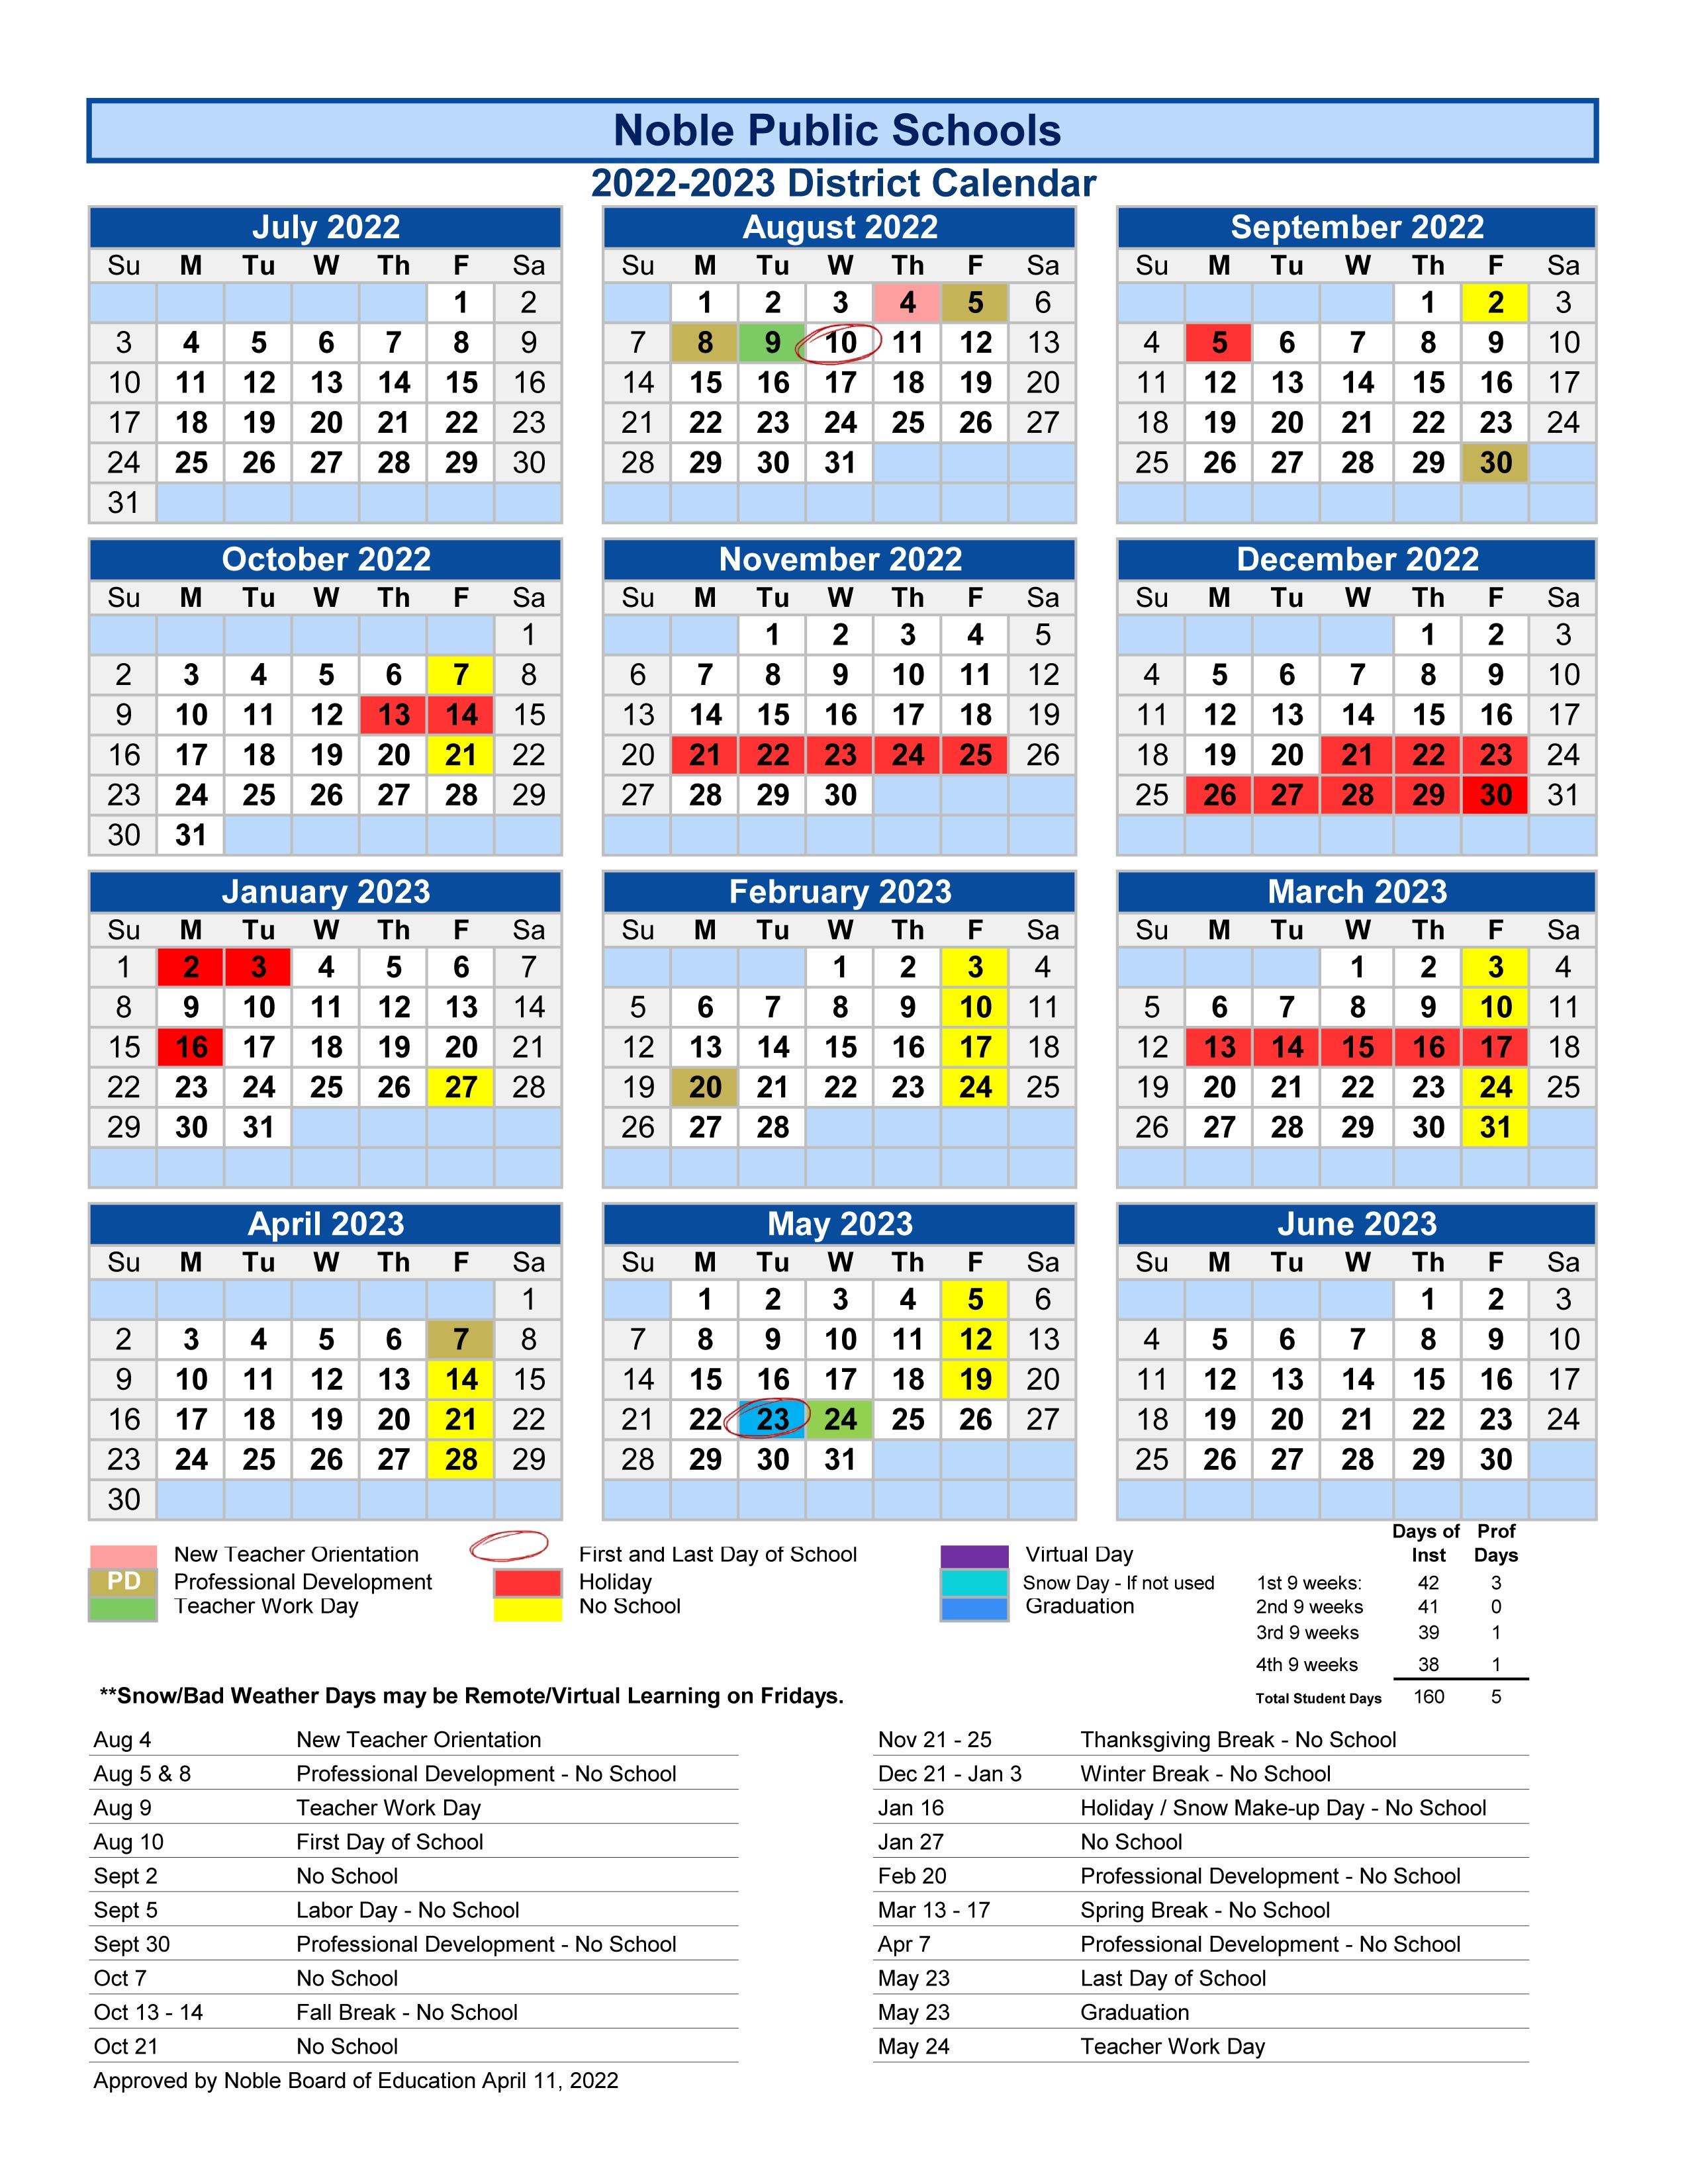 Calendar for Disrict